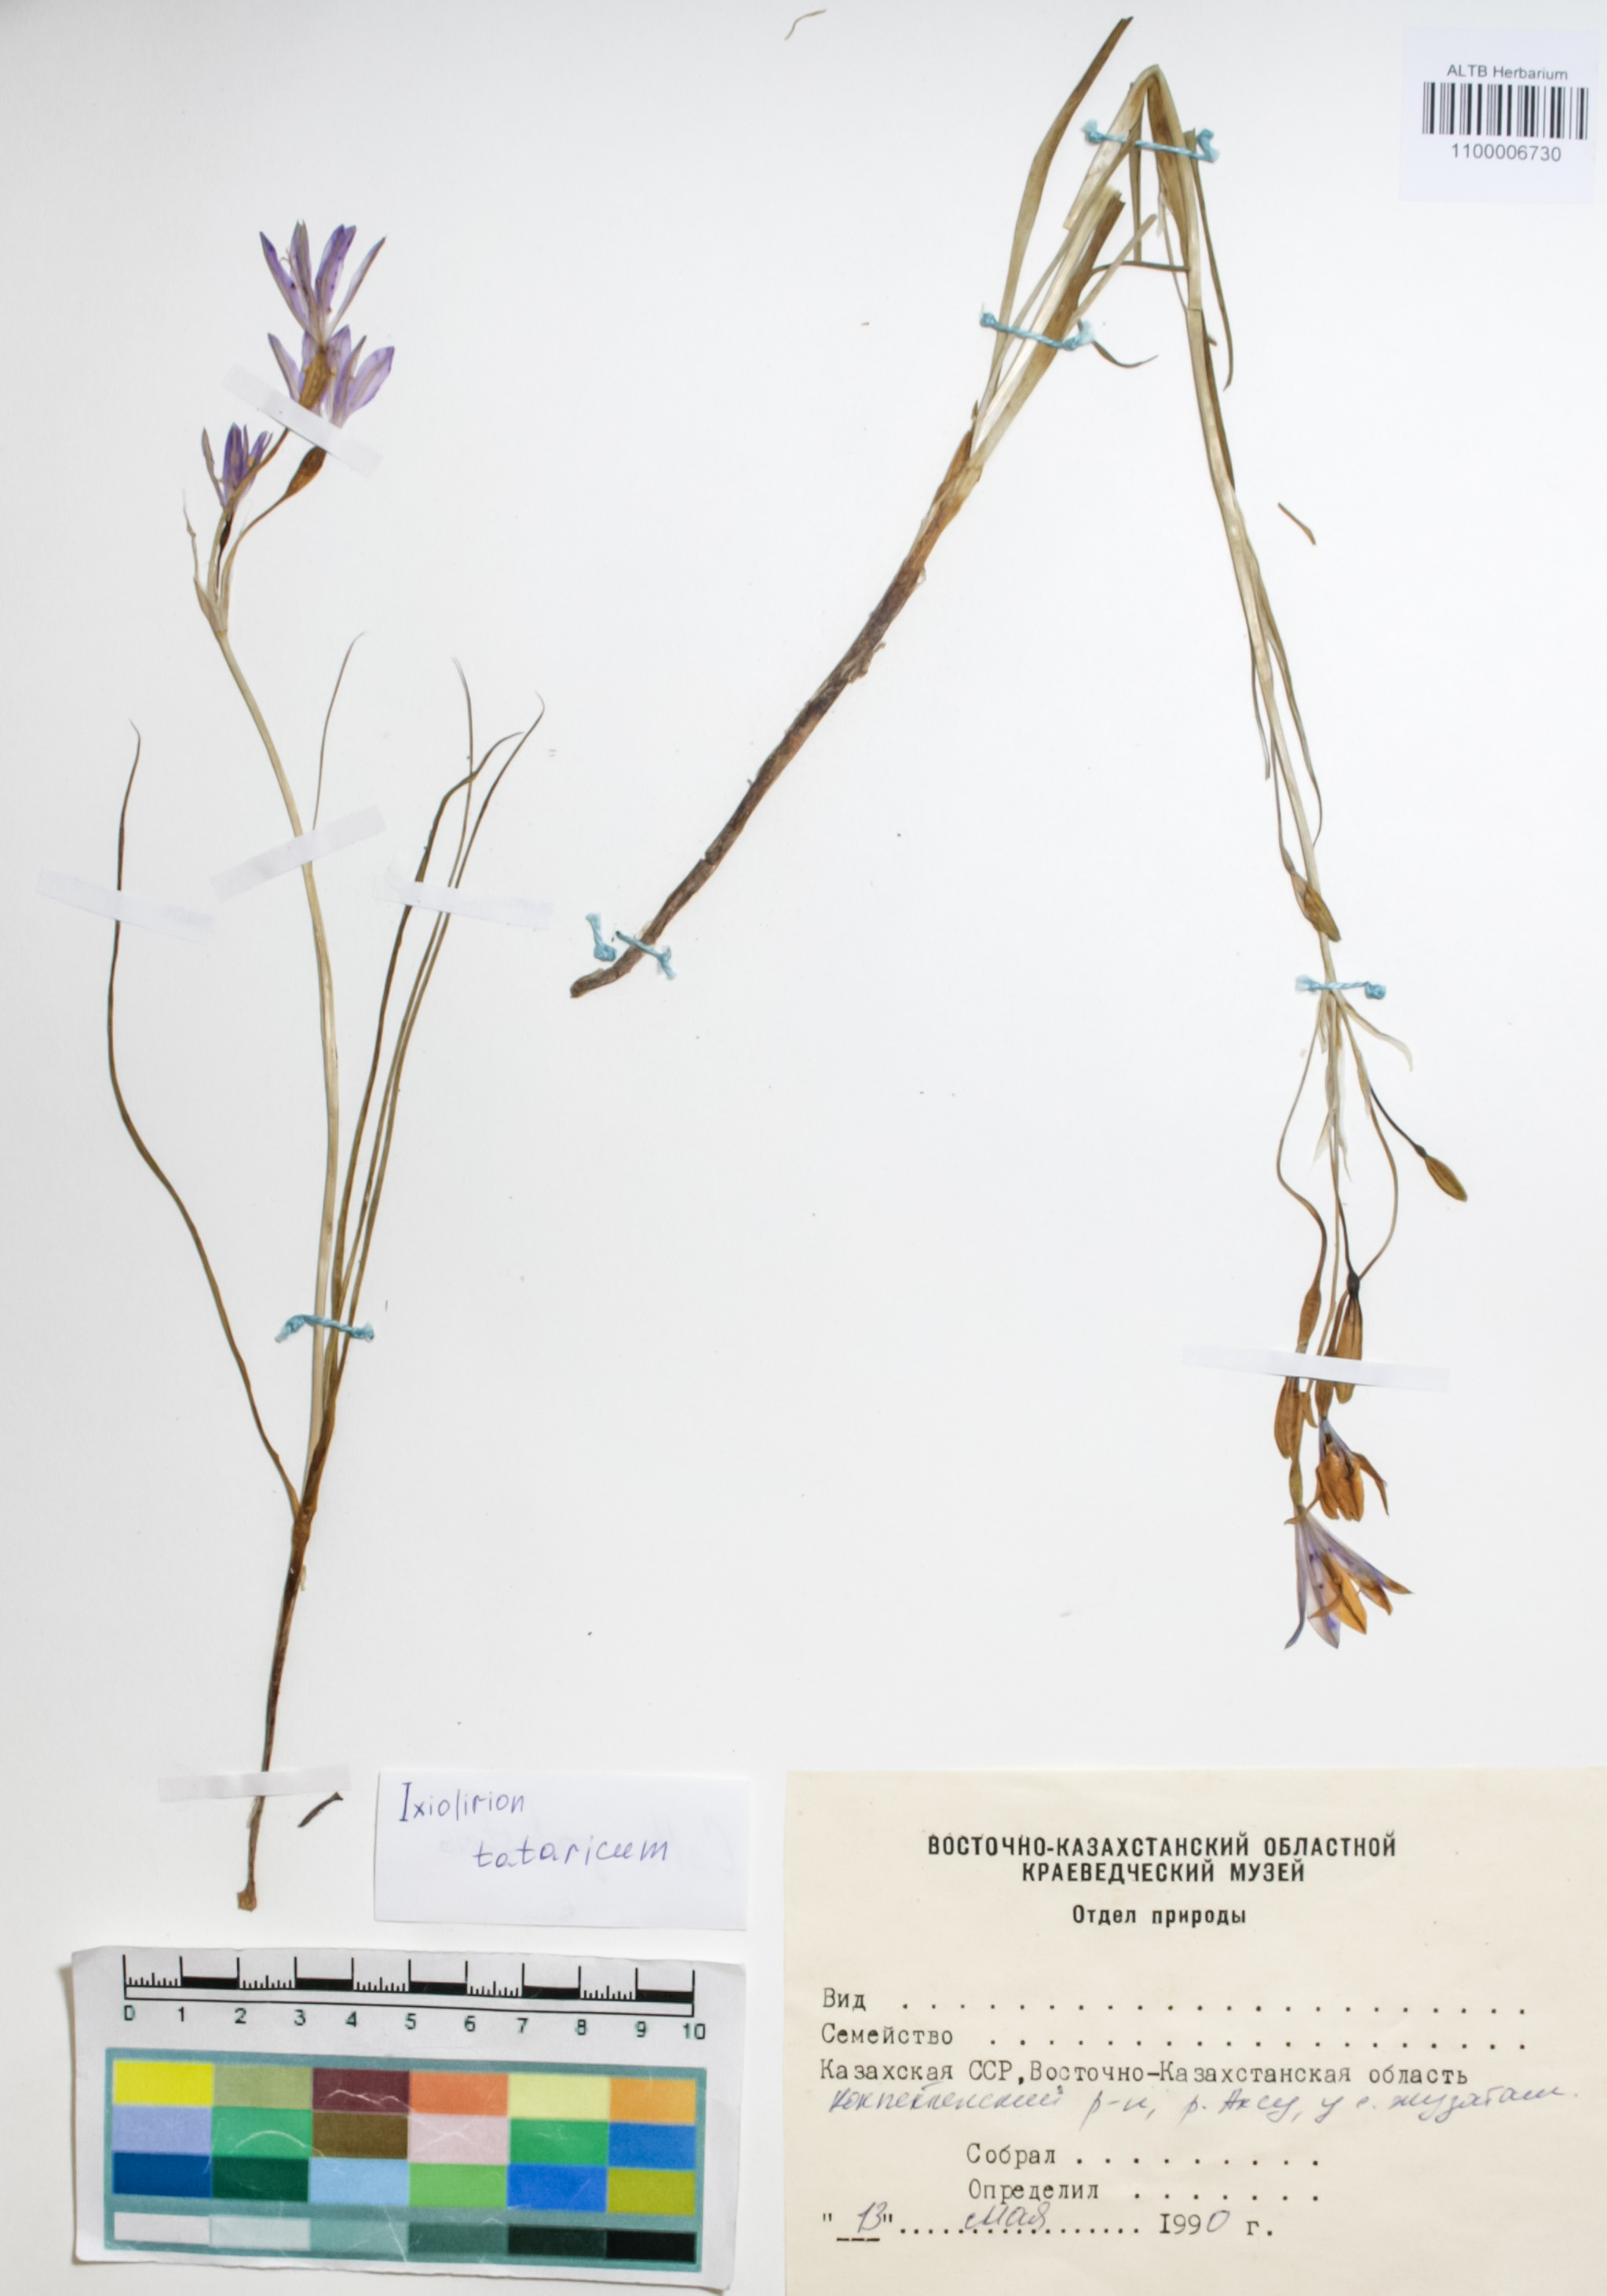 Amaryllidaceae,Ixiolirion tataricum (Pall.) Schult. & Schult.f.